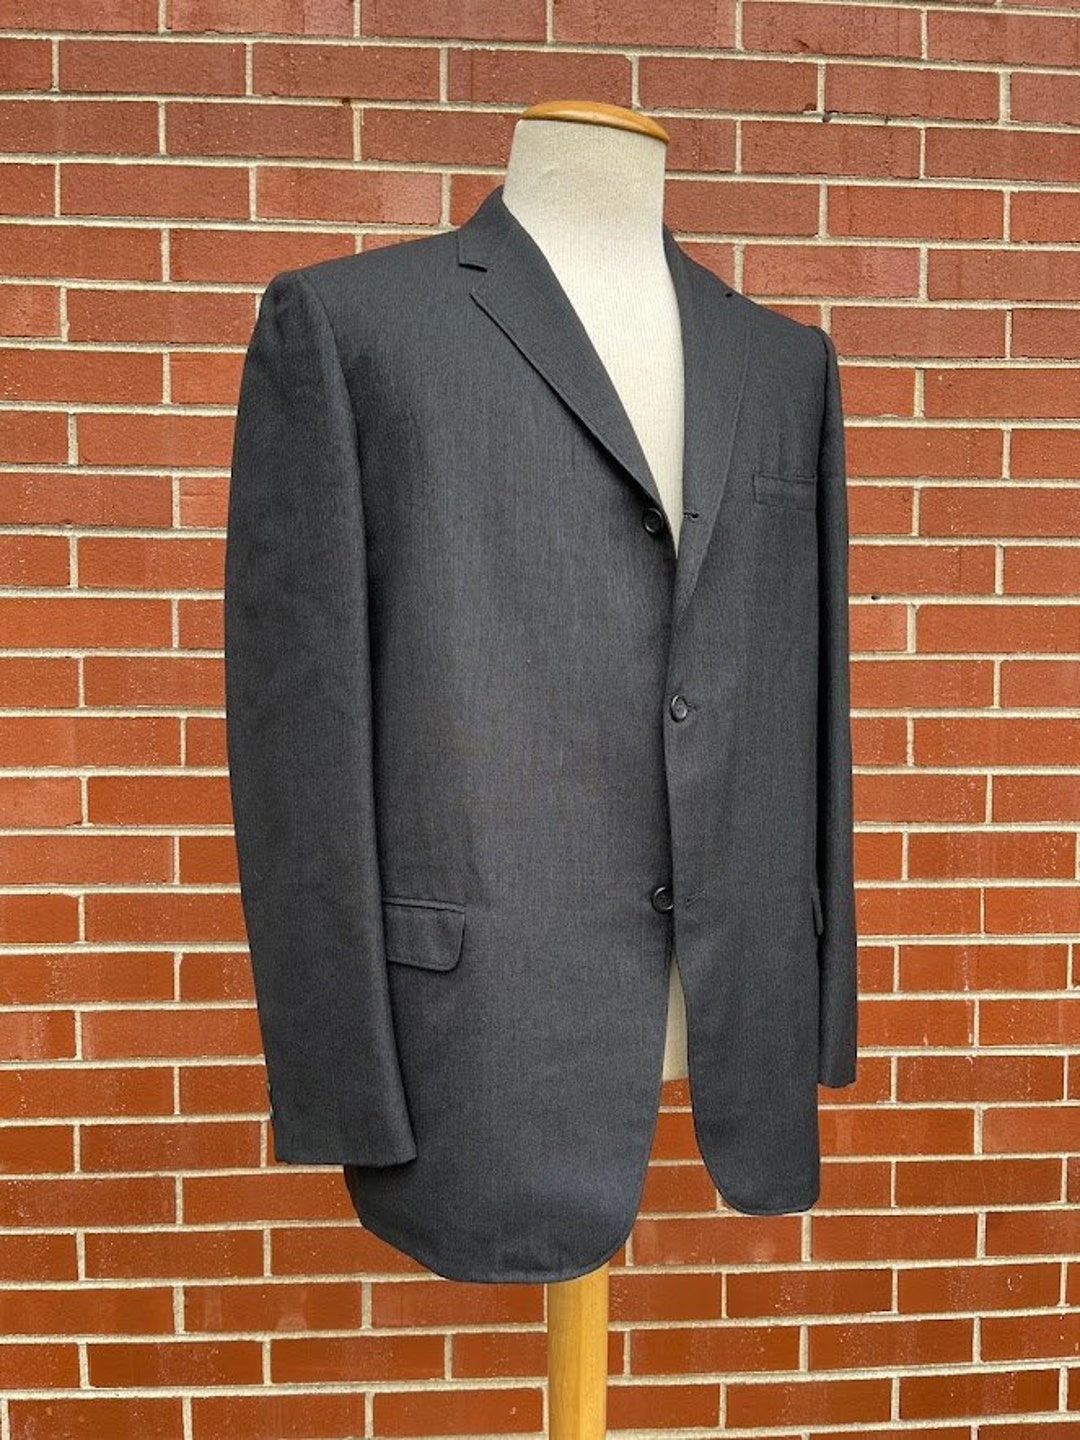 Wintage Men's Wool Casual and Festive Blazer Coat Jacket : Brick brick / 42 / Large